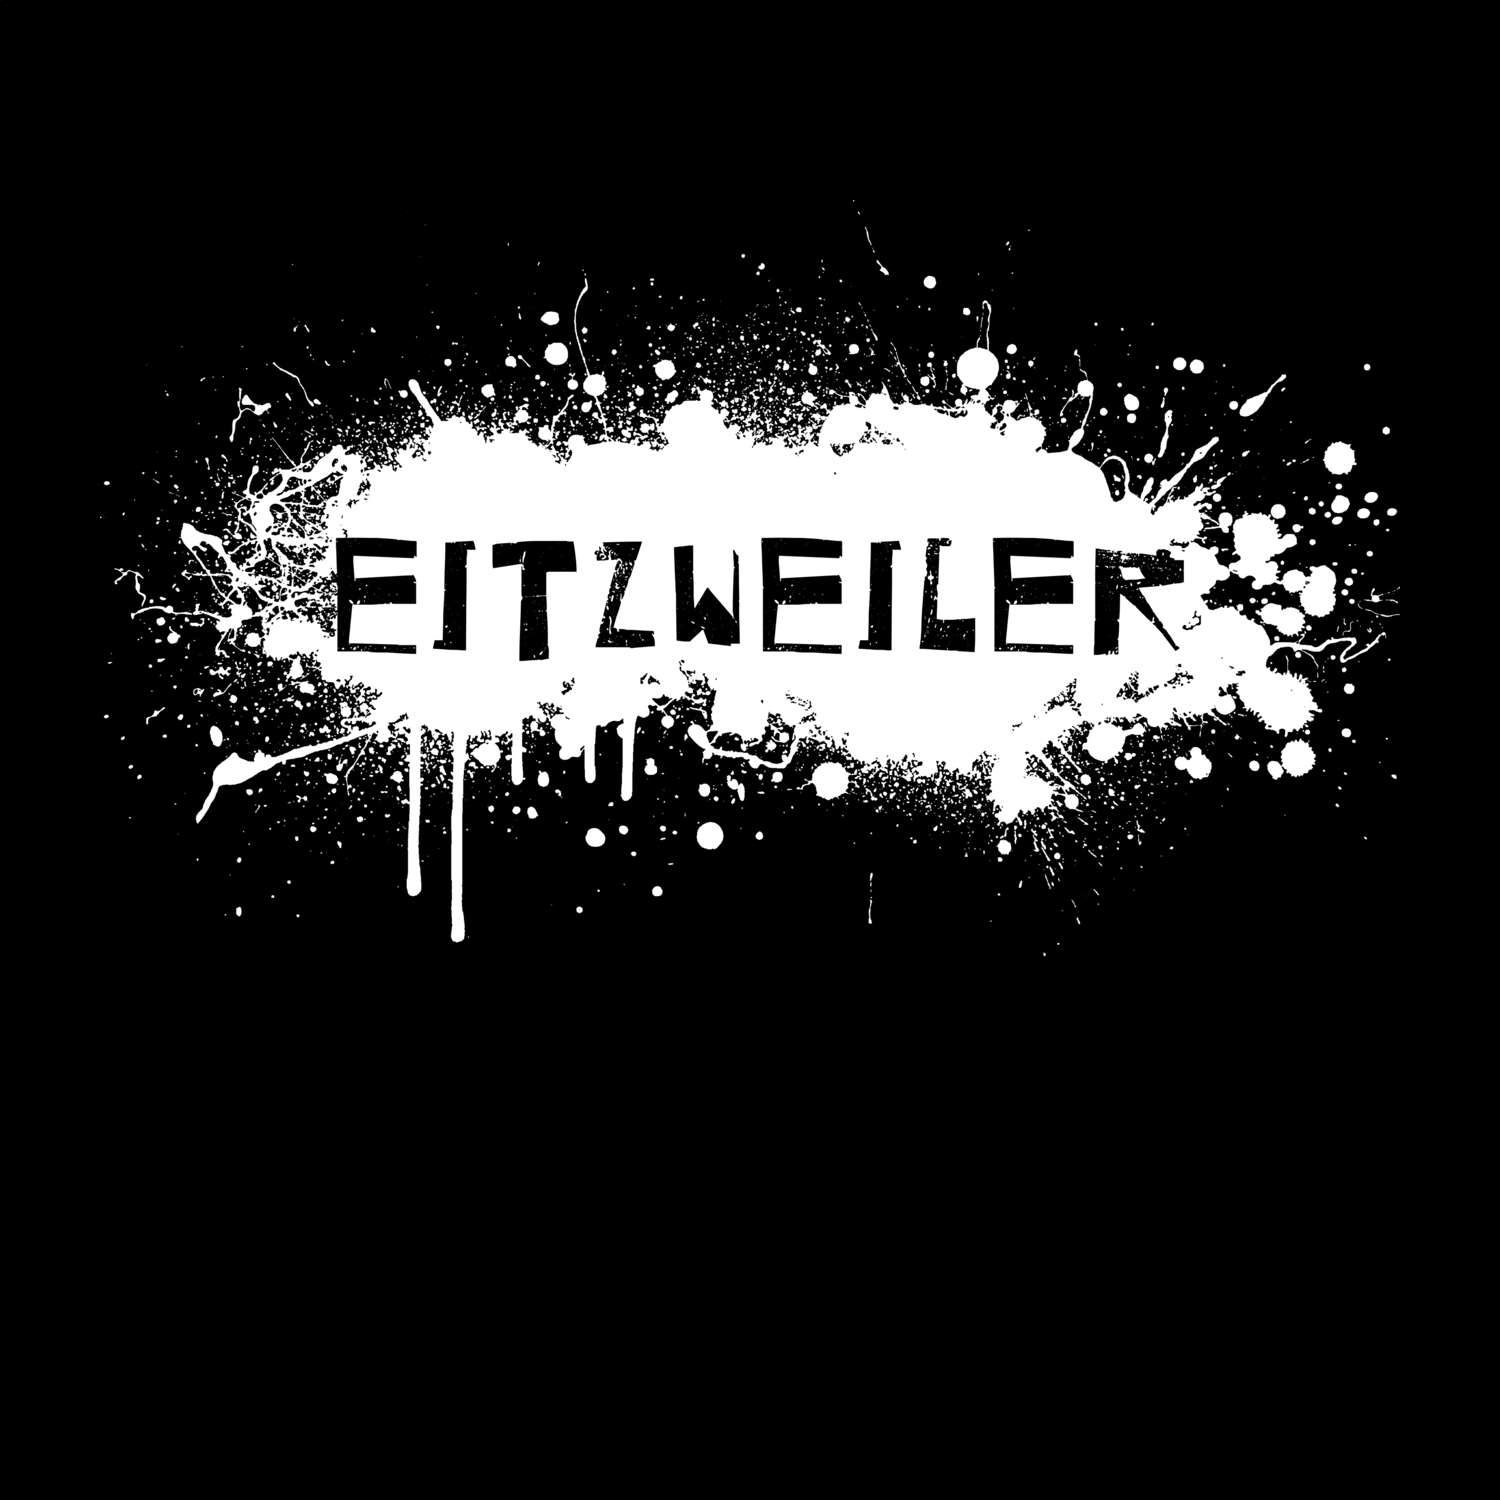 Eitzweiler T-Shirt »Paint Splash Punk«